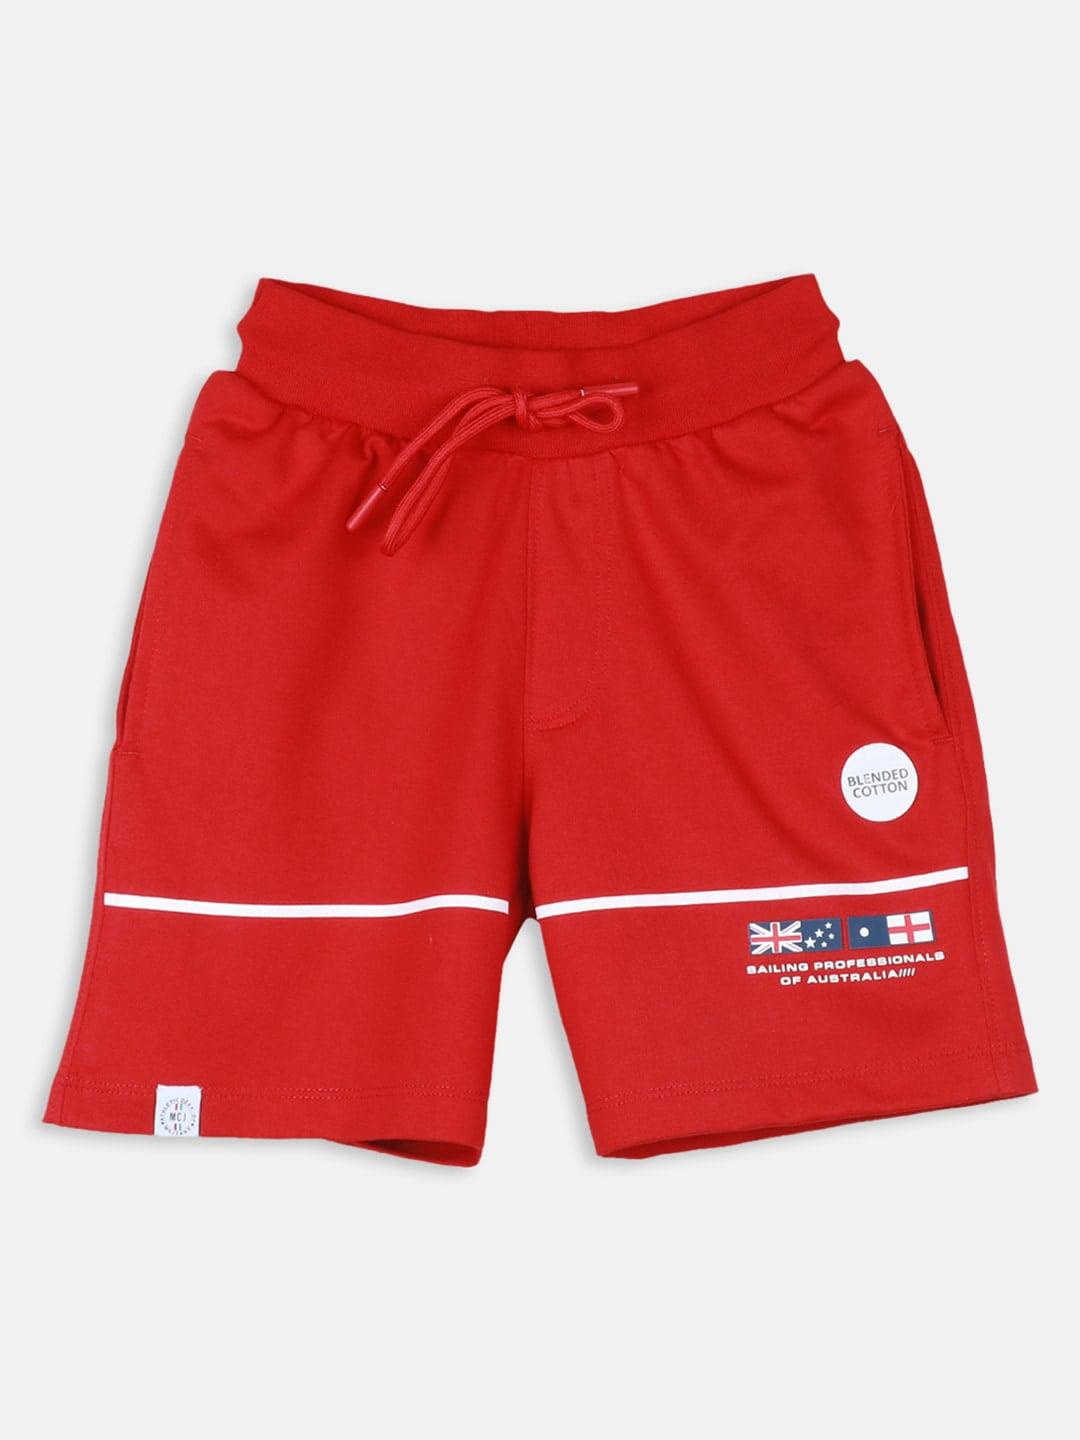 monte carlo boys printed sports shorts